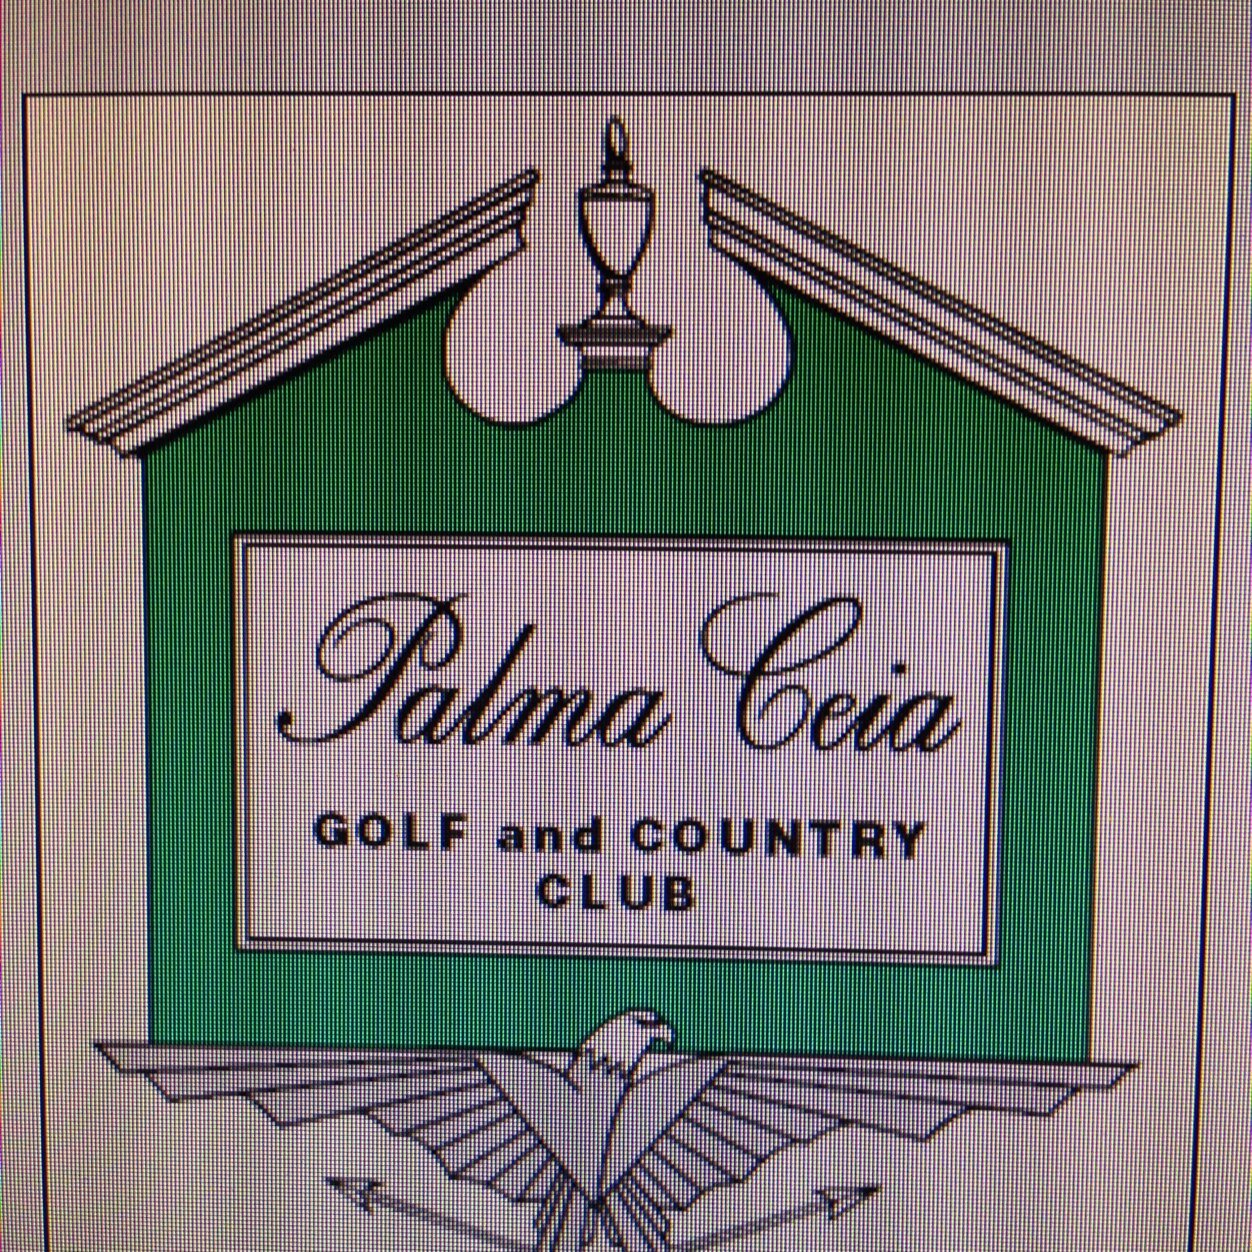 Golf Course Superintendent @ Palma Ceia Golf & CC. Texas A&M Fightin' Texas Aggie.